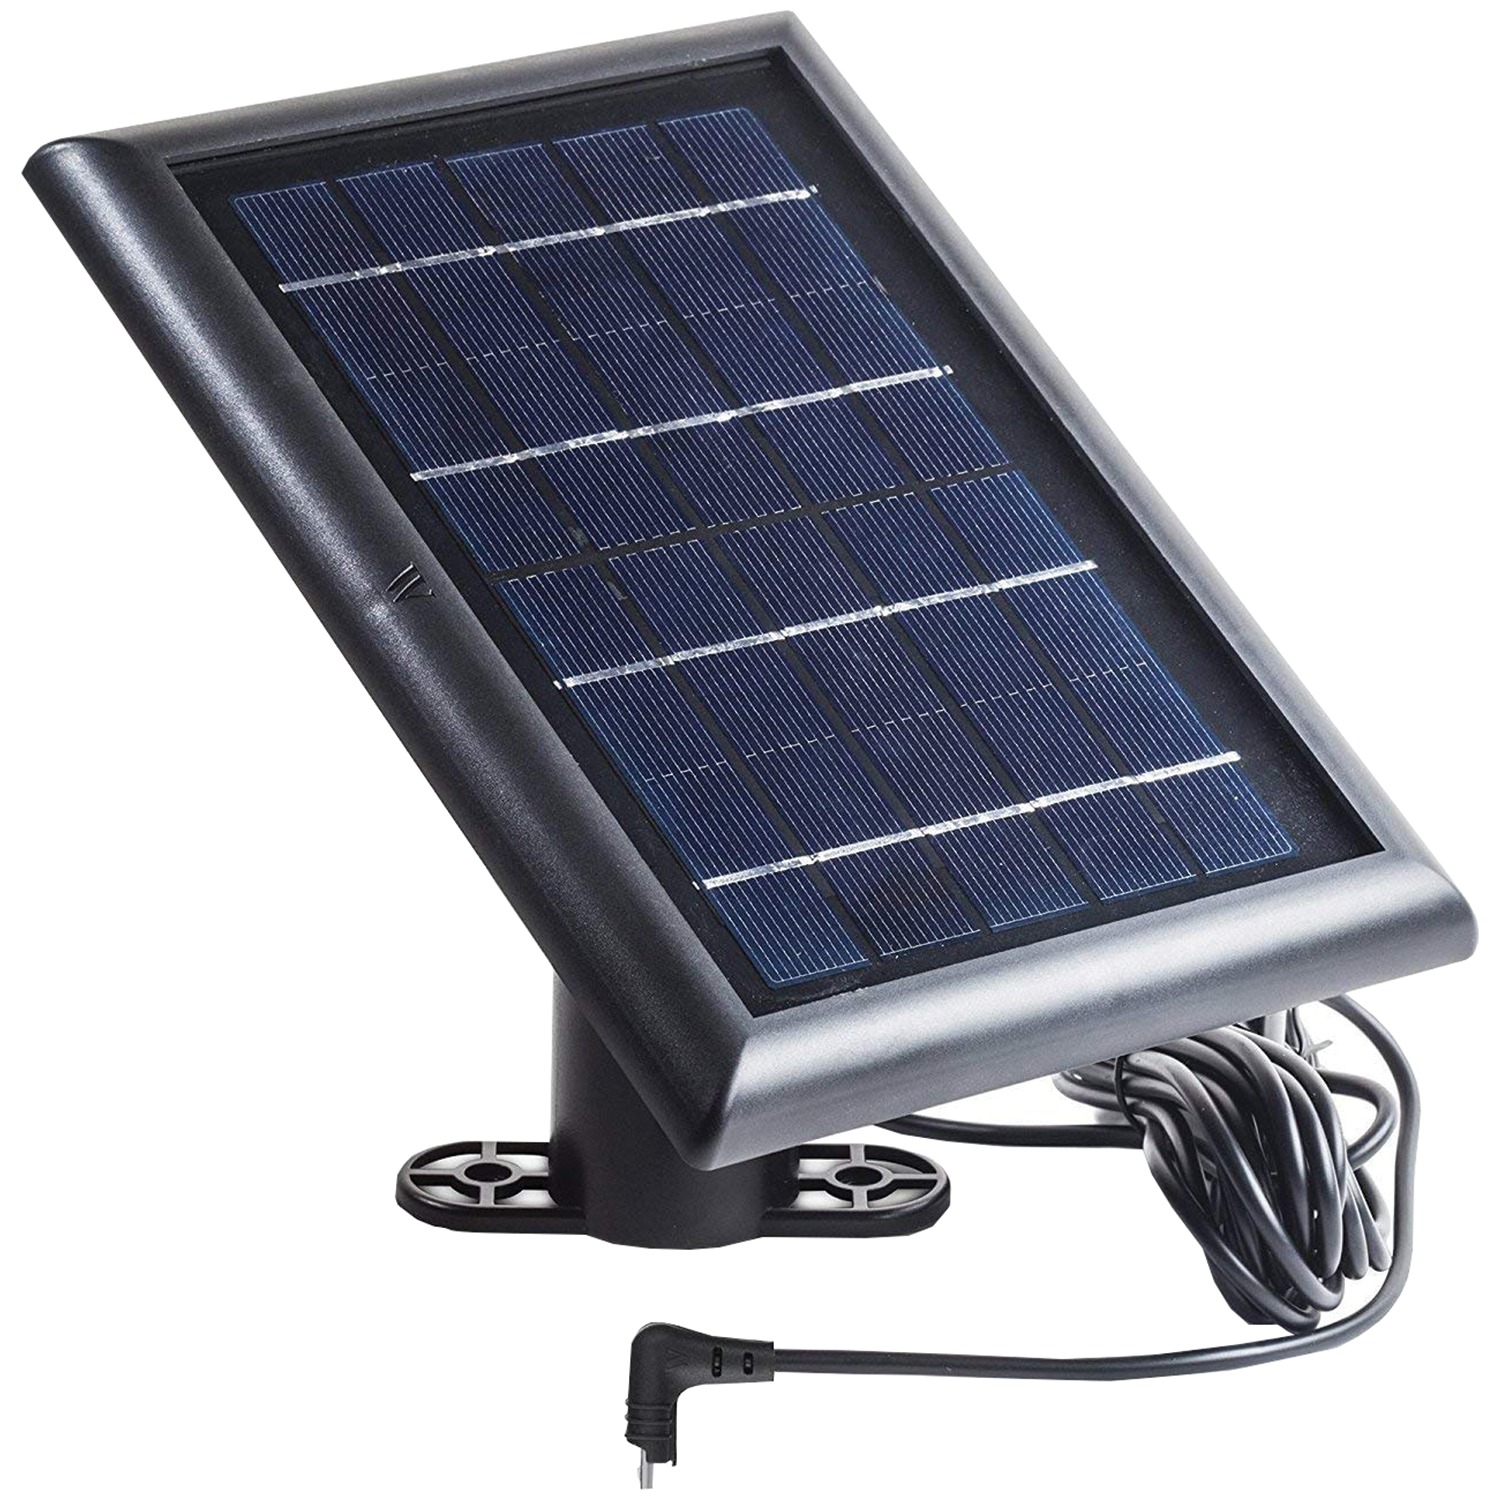 Wasserstein Arlo Solar Panel Compatible with Arlo Pro 2, Pro, Go & Ligh (1Pack) 699972679682 eBay